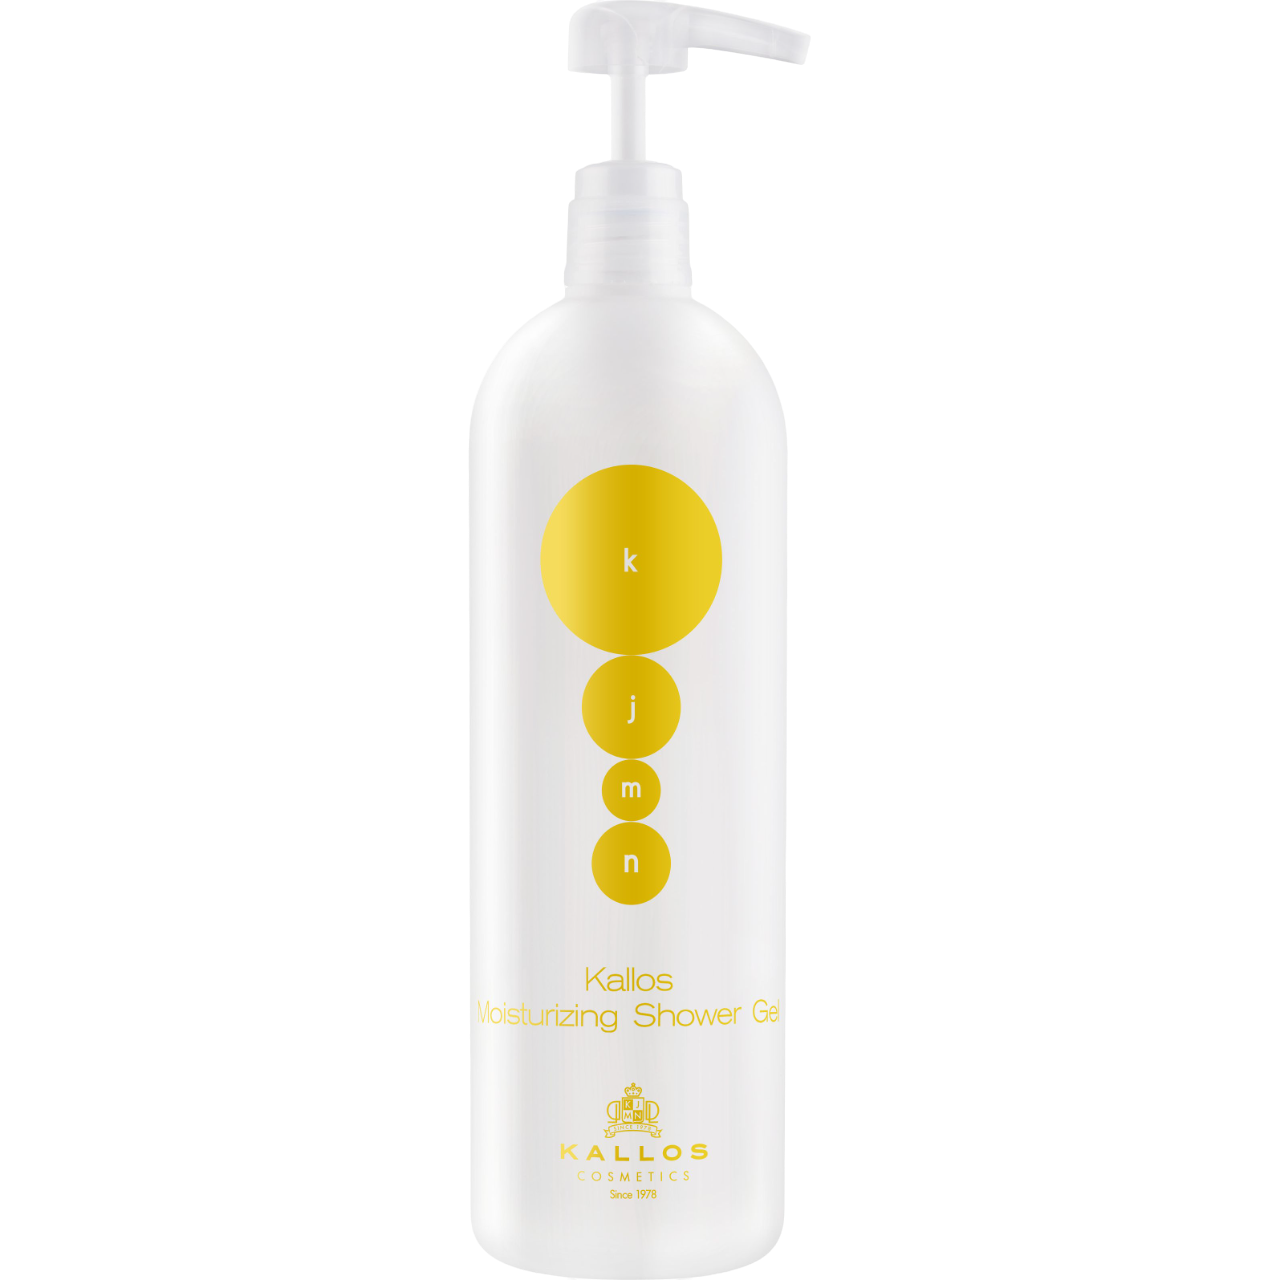 Гель для душа Kallos Cosmetics Moisturizing Shower Gel увлажняющий с ароматом мандарина, 1 л - фото 1